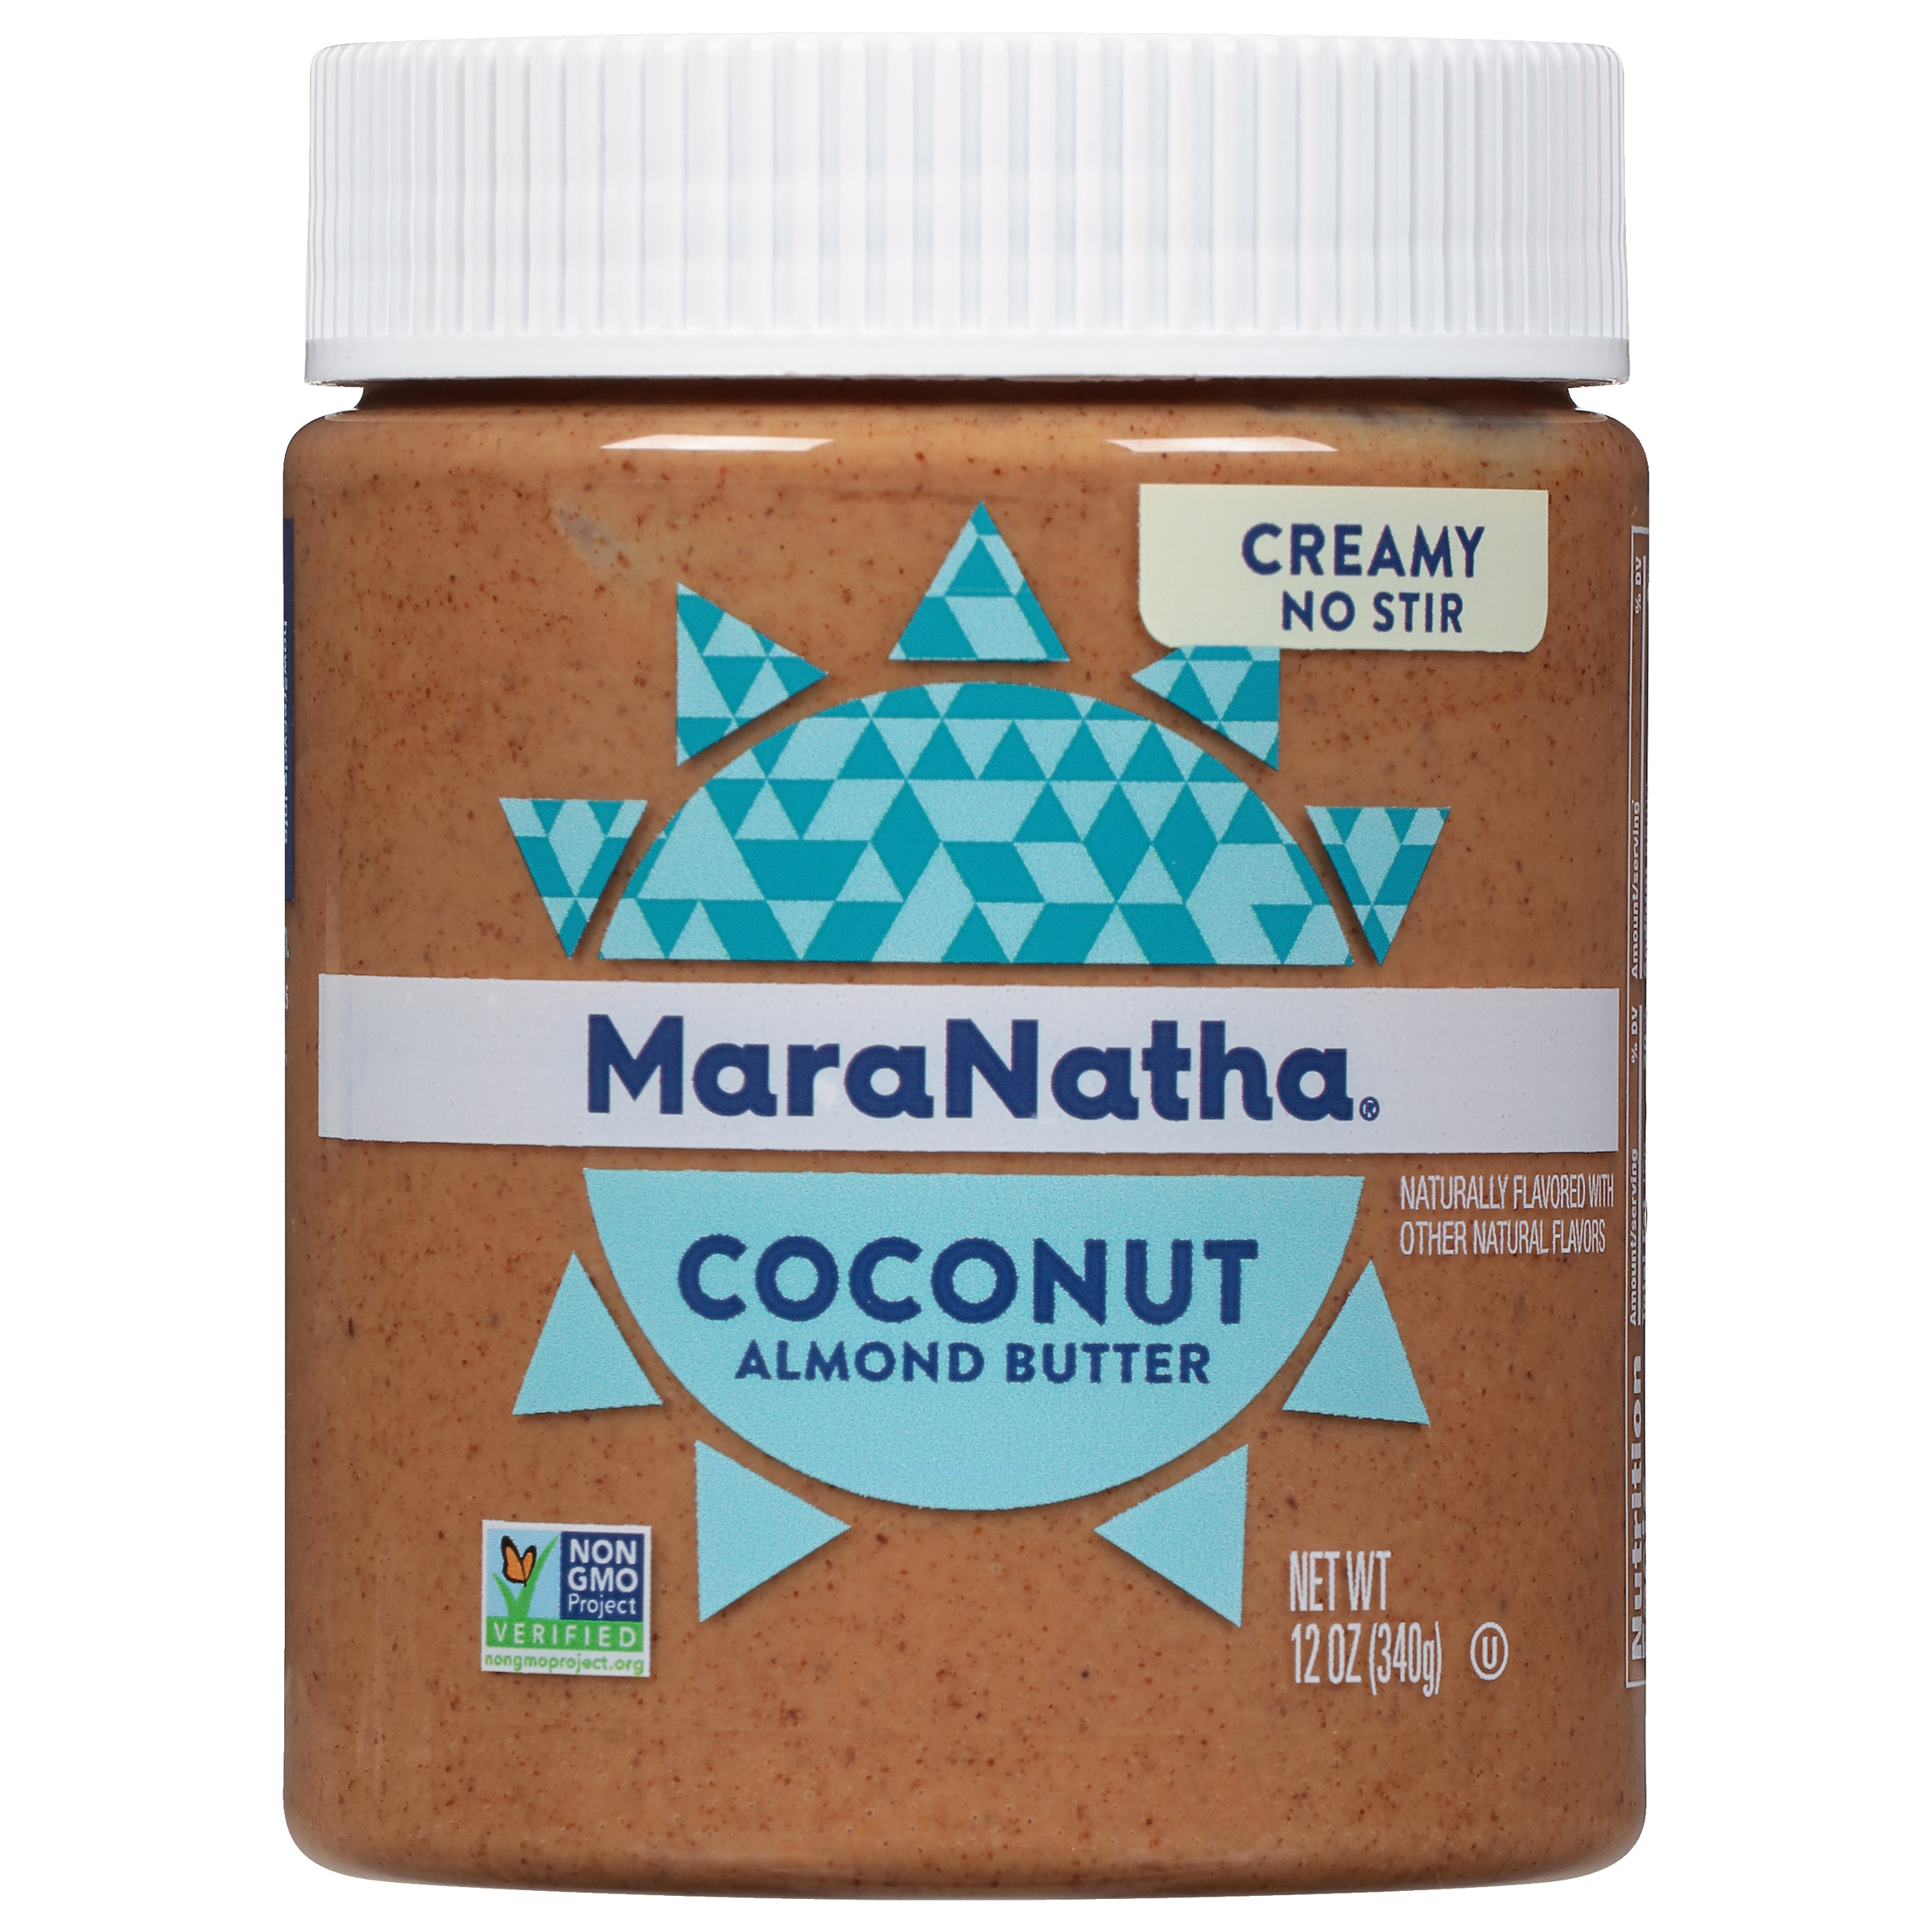 MaraNatha Creamy Coconut Almond Butter, 12 oz - image 1 of 8